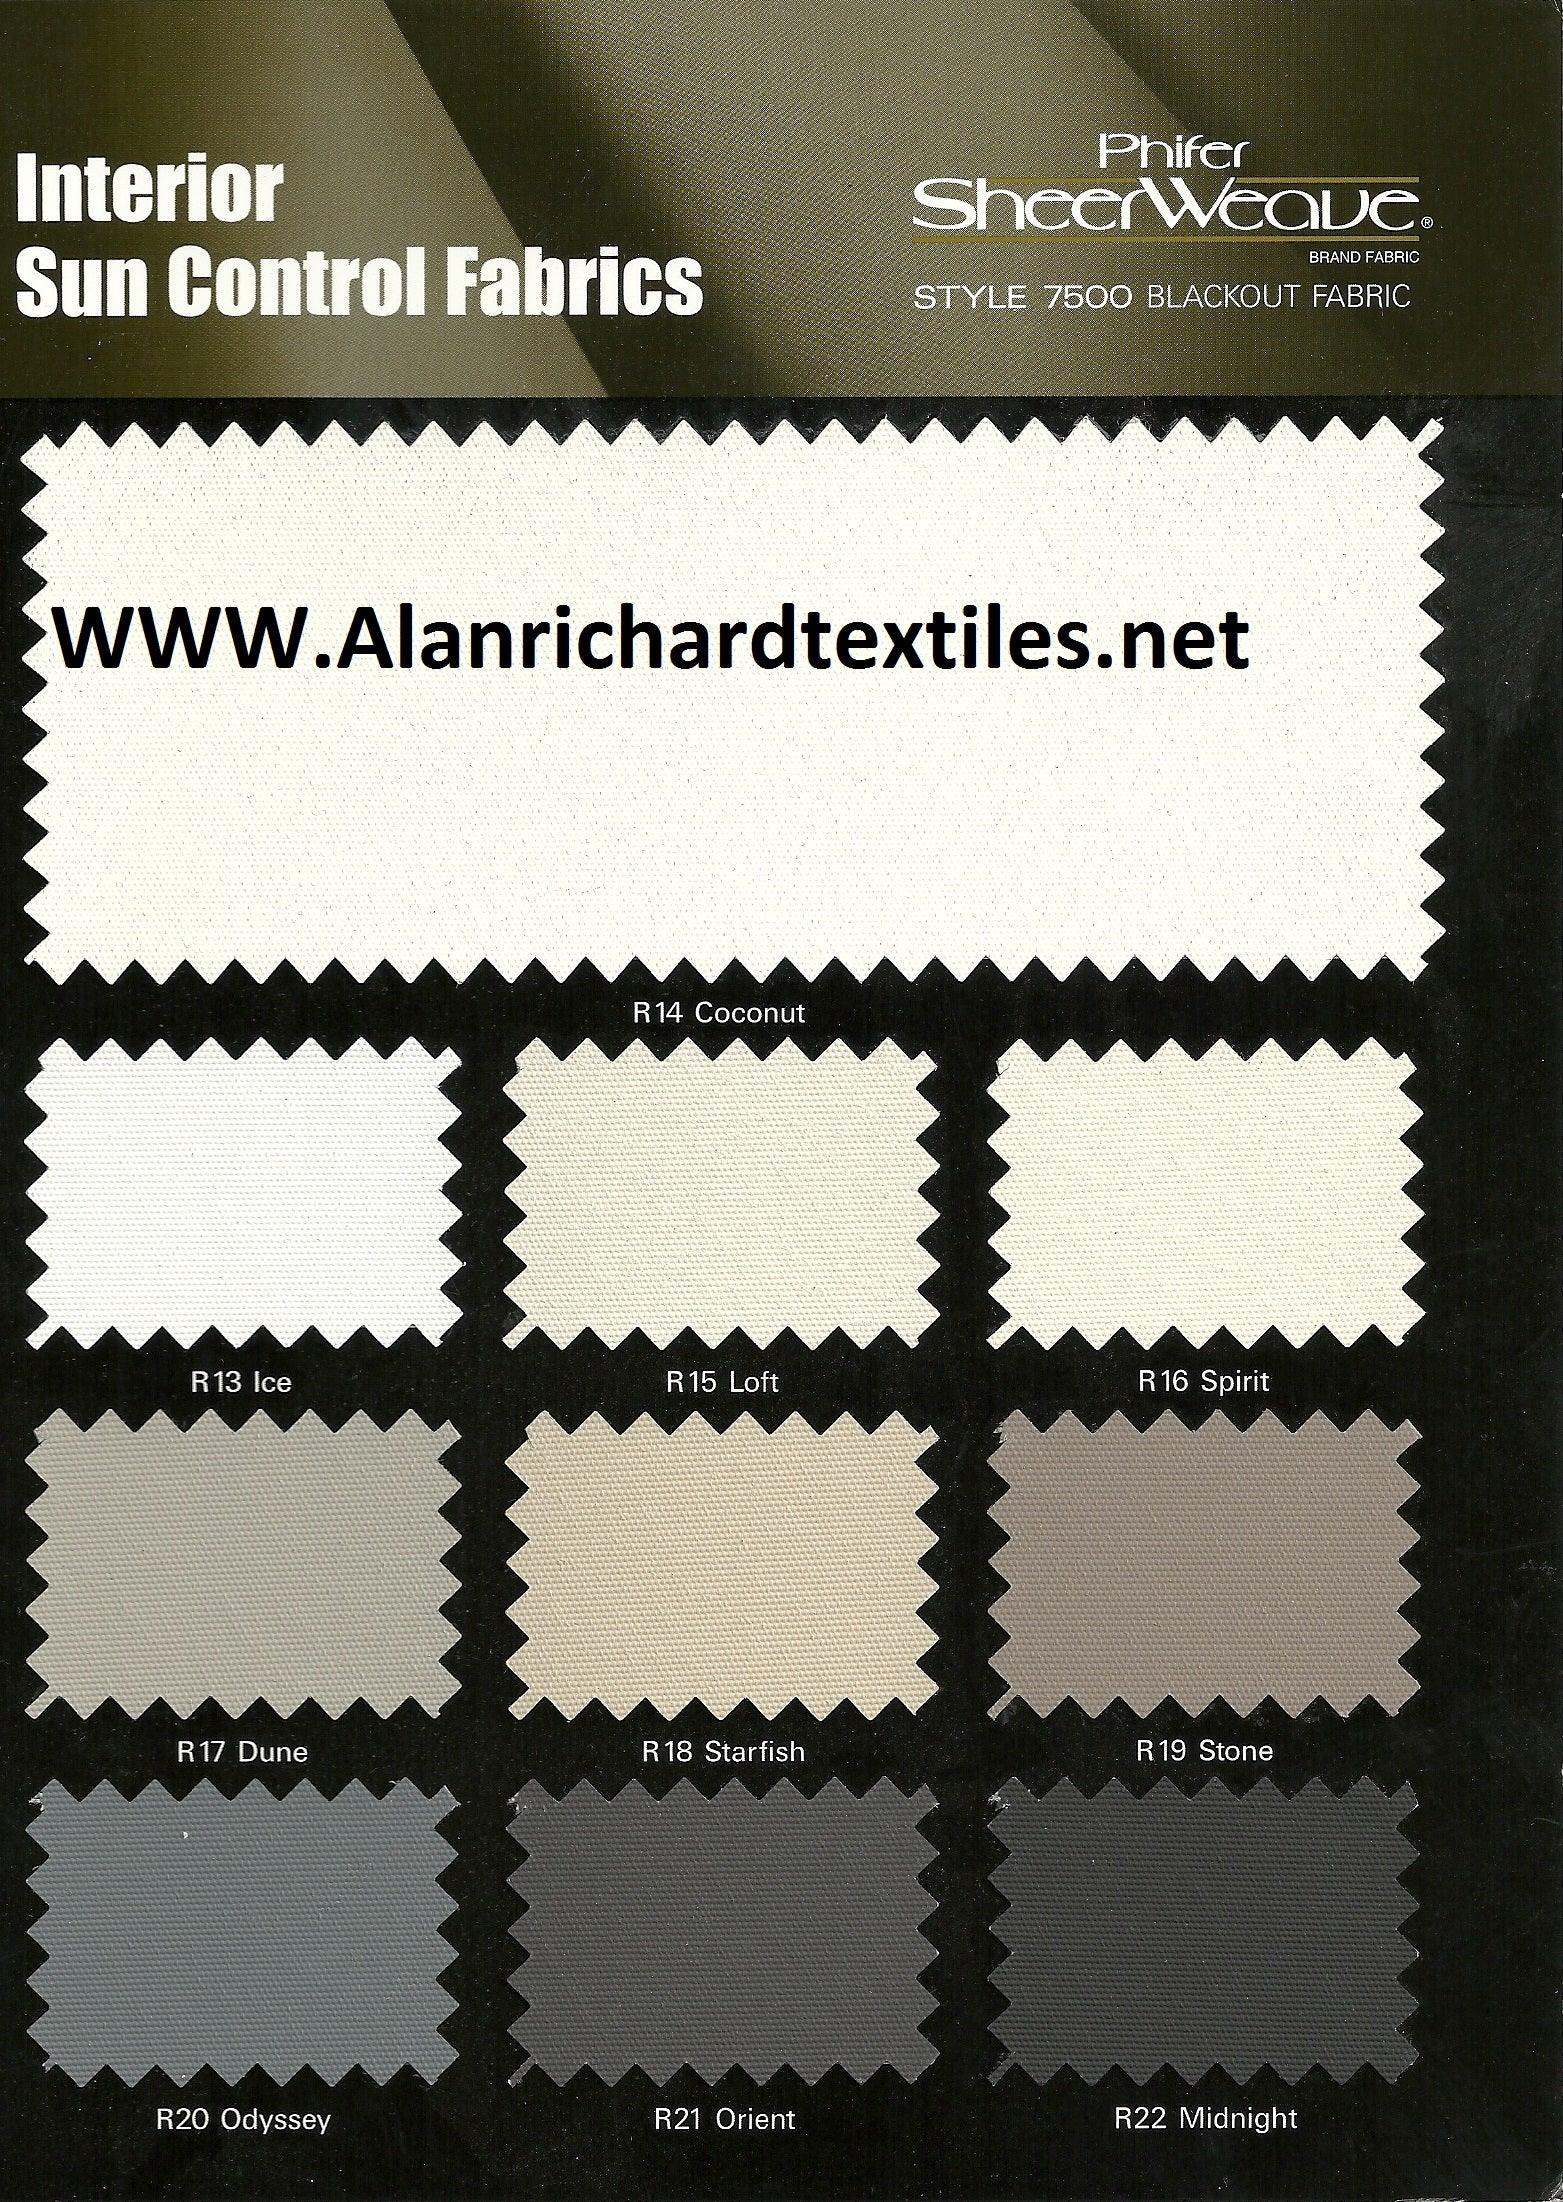 49-60"(Width) 7500 SheerWeave® Series - Alan Richard Textiles, LTD 7500 Phifer SheerWeave� Series (blackout)